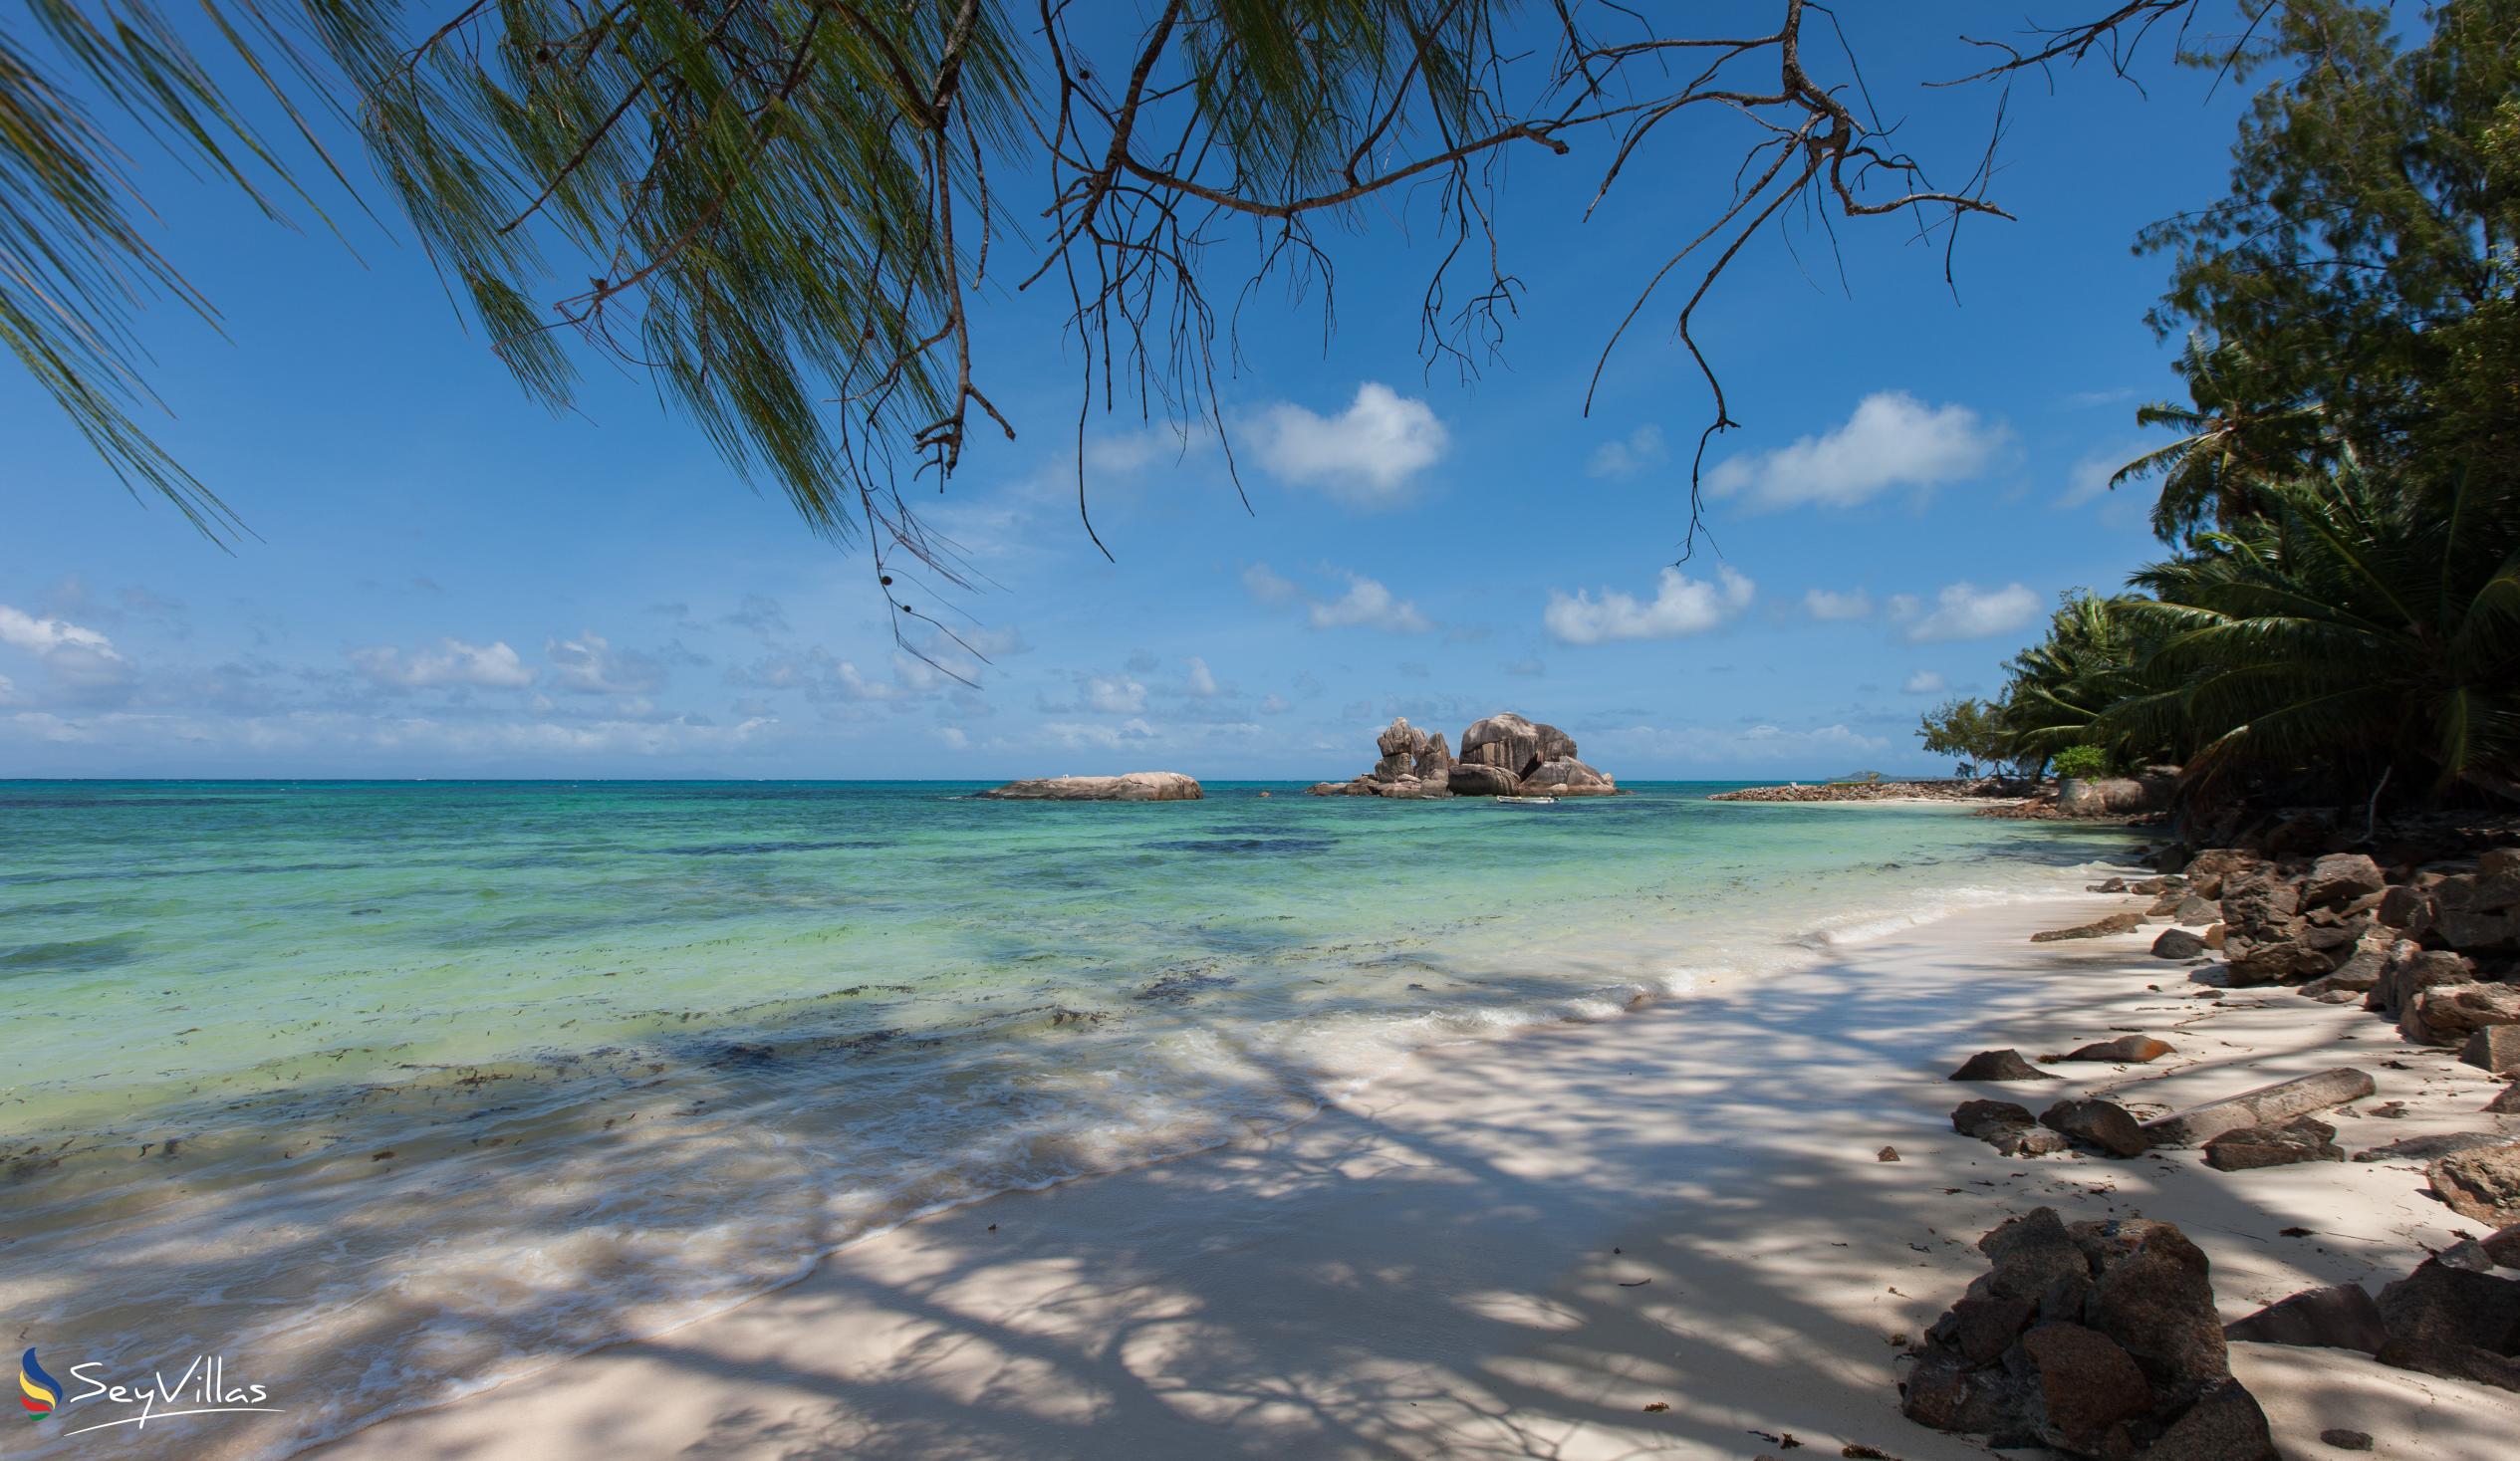 Foto 42: YASAD Luxury Beach Residence - Posizione - Praslin (Seychelles)